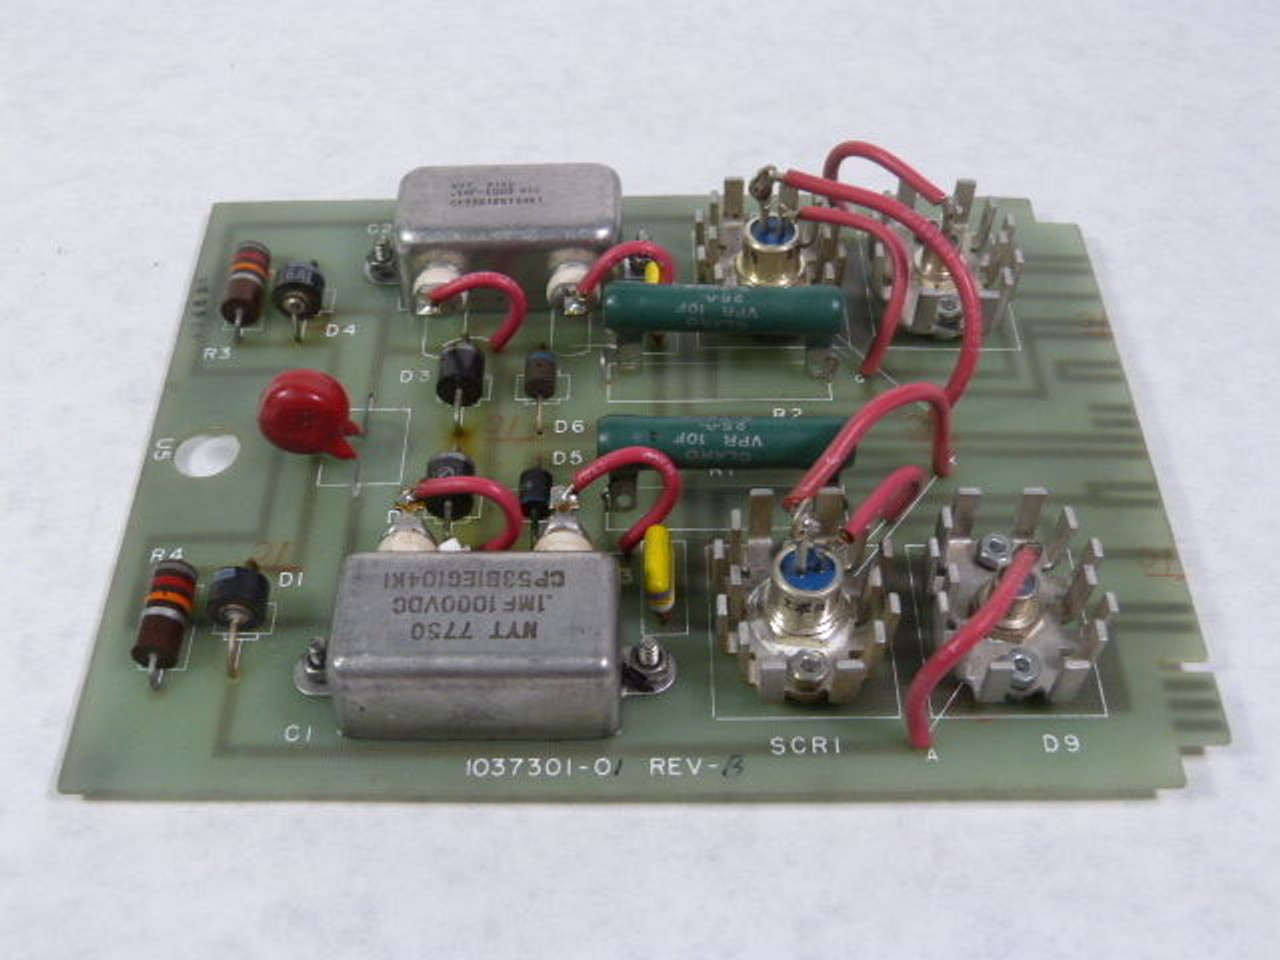 Fincor 1037301-0 1037302 Power Supply Module Board USED